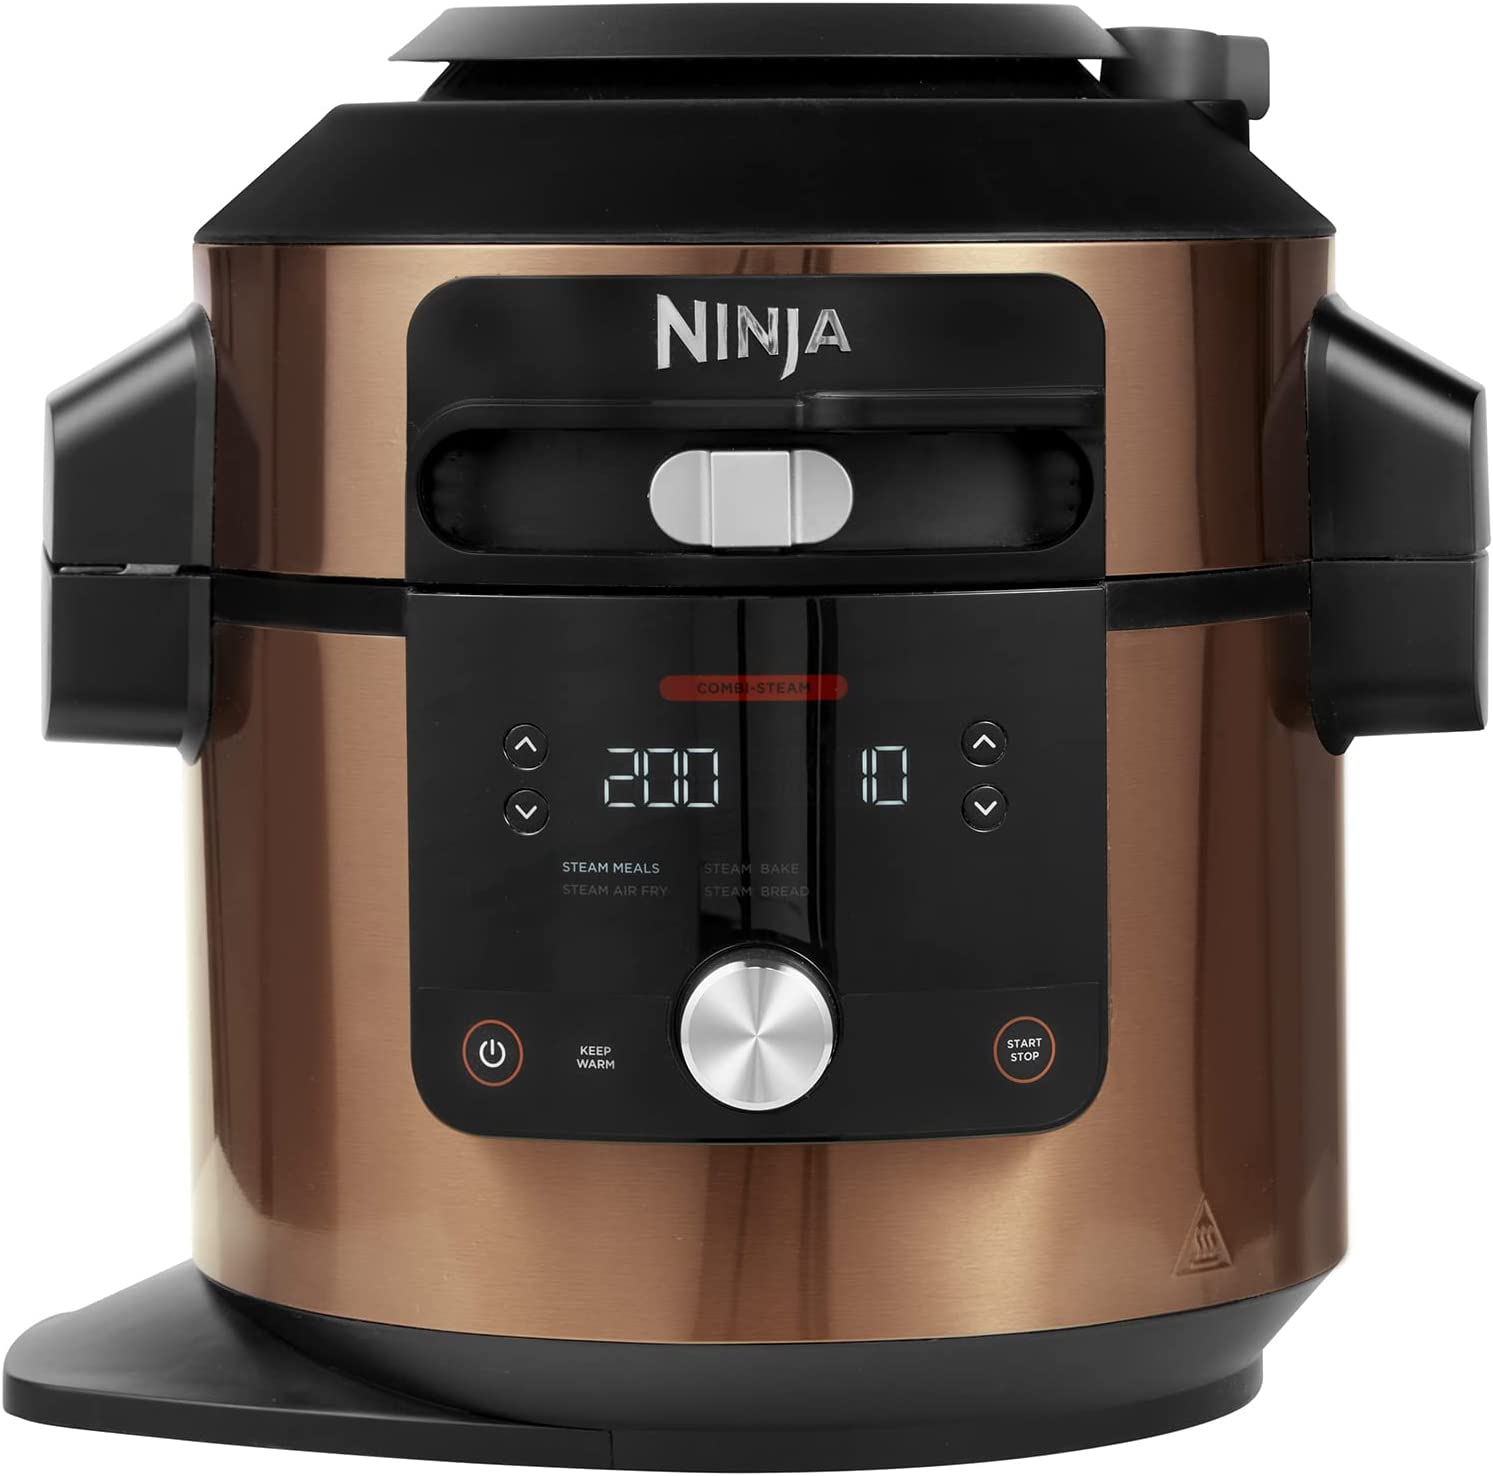 Lid For) Ninja Foodi MAX 14-in-1 SmartLid Multi-Cooker & Air Fryer